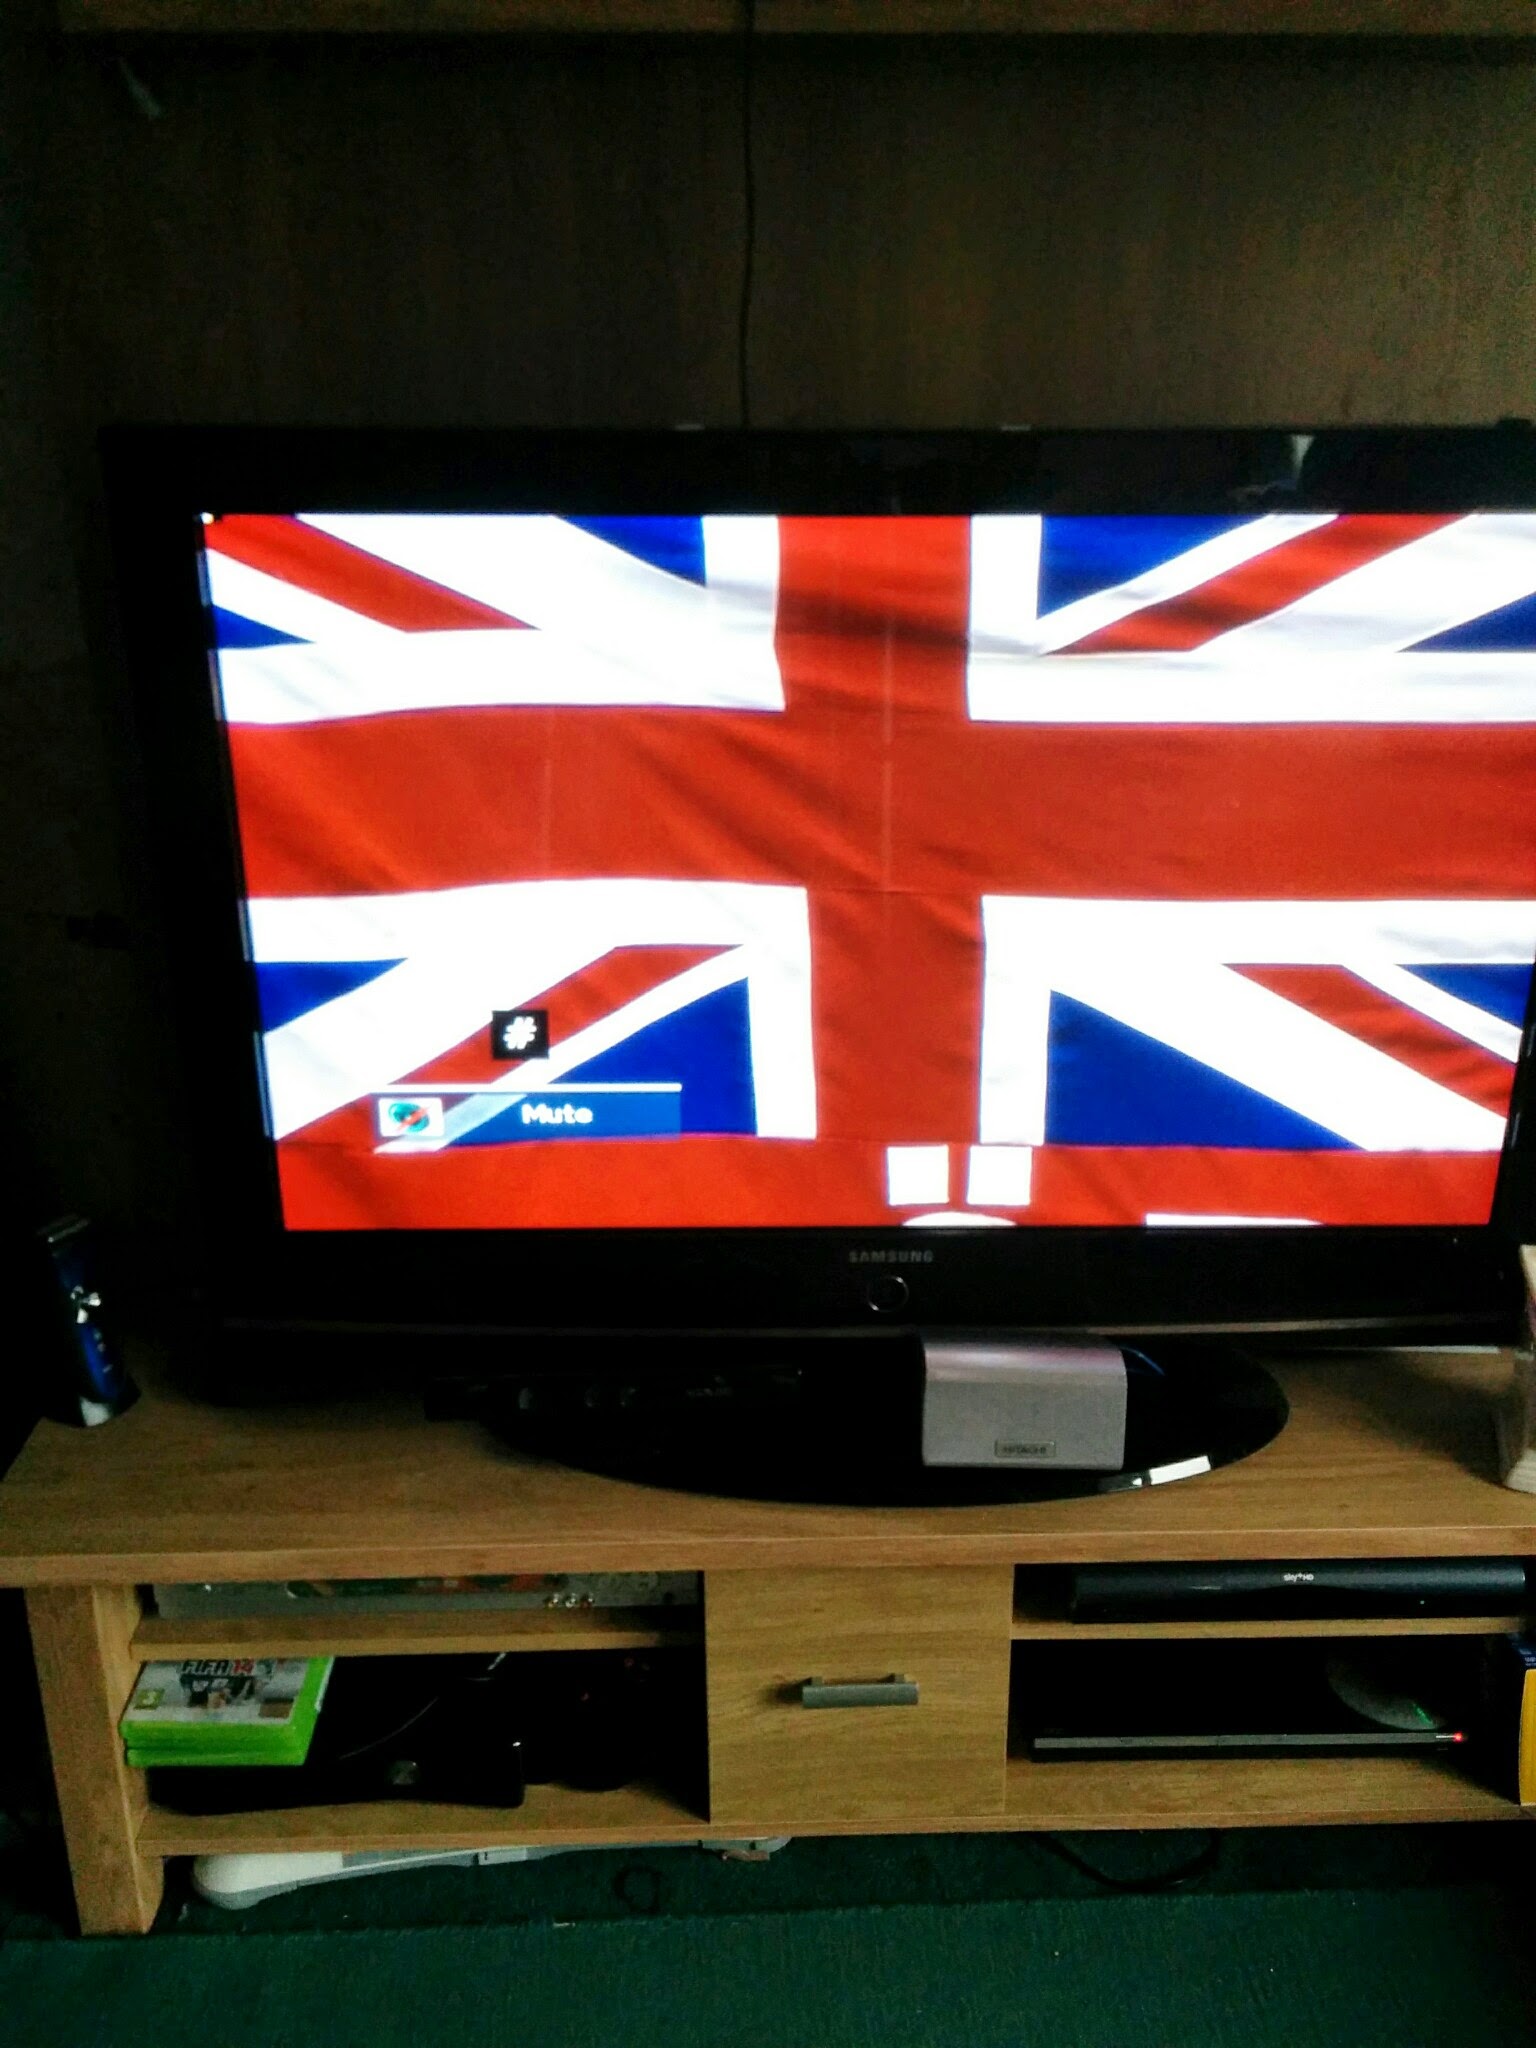 ITV British flag at England game